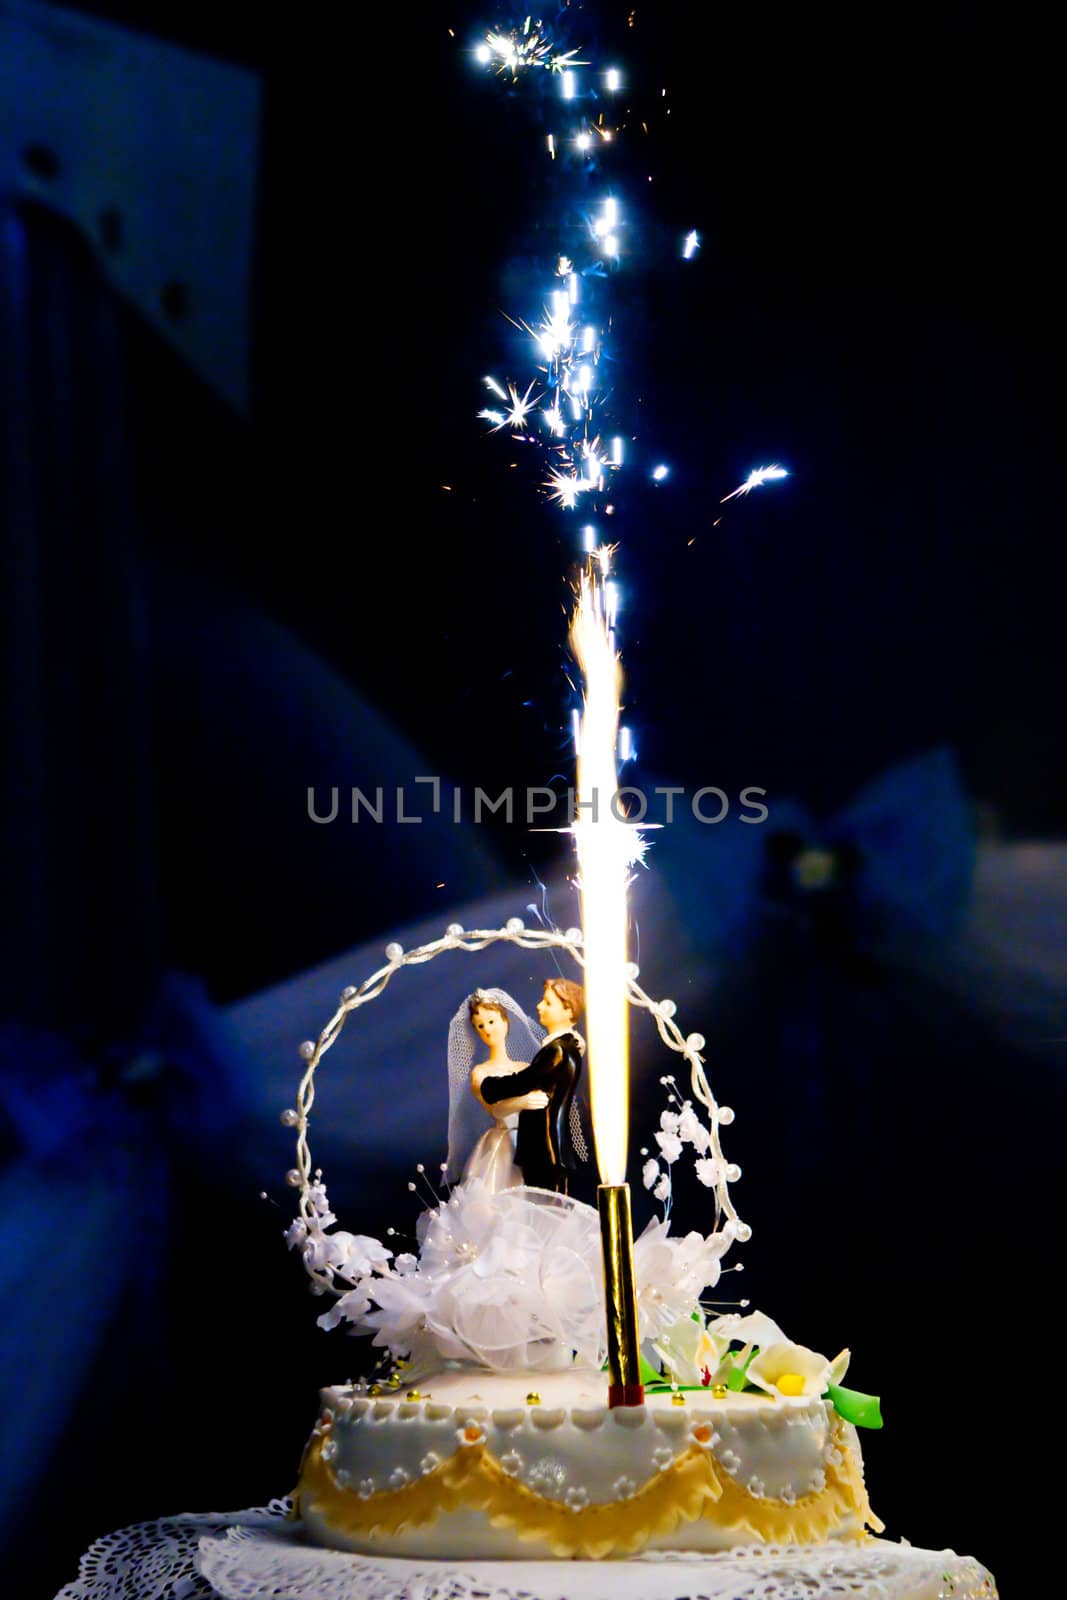 Fireworks and wedding cake by vsurkov